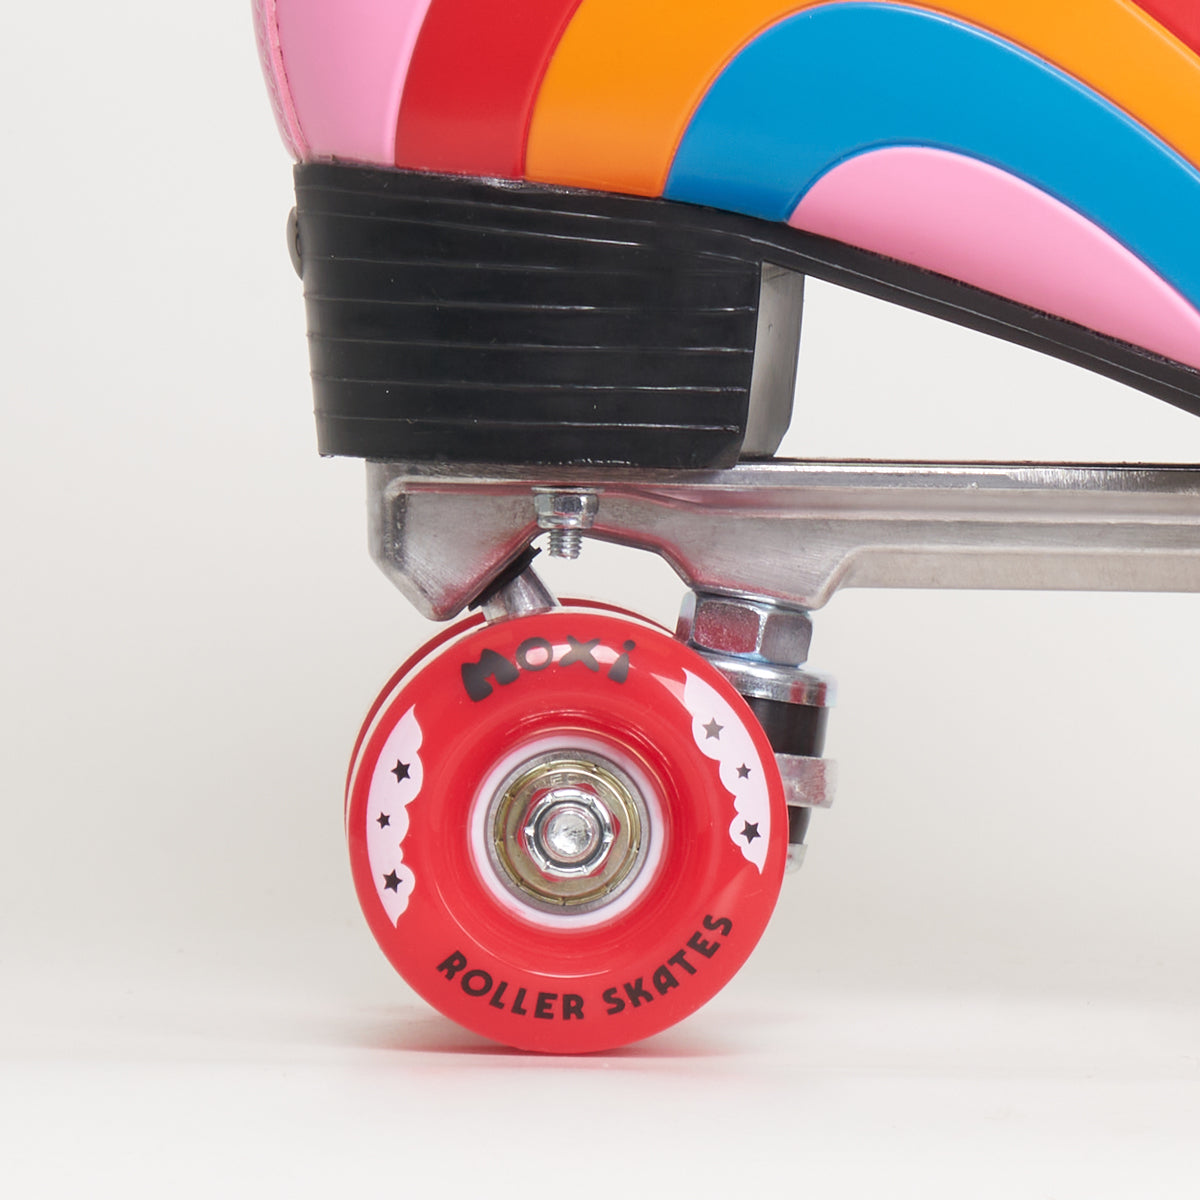 Moxi Rainbow Rider Rollerskates - Bubblegum pink